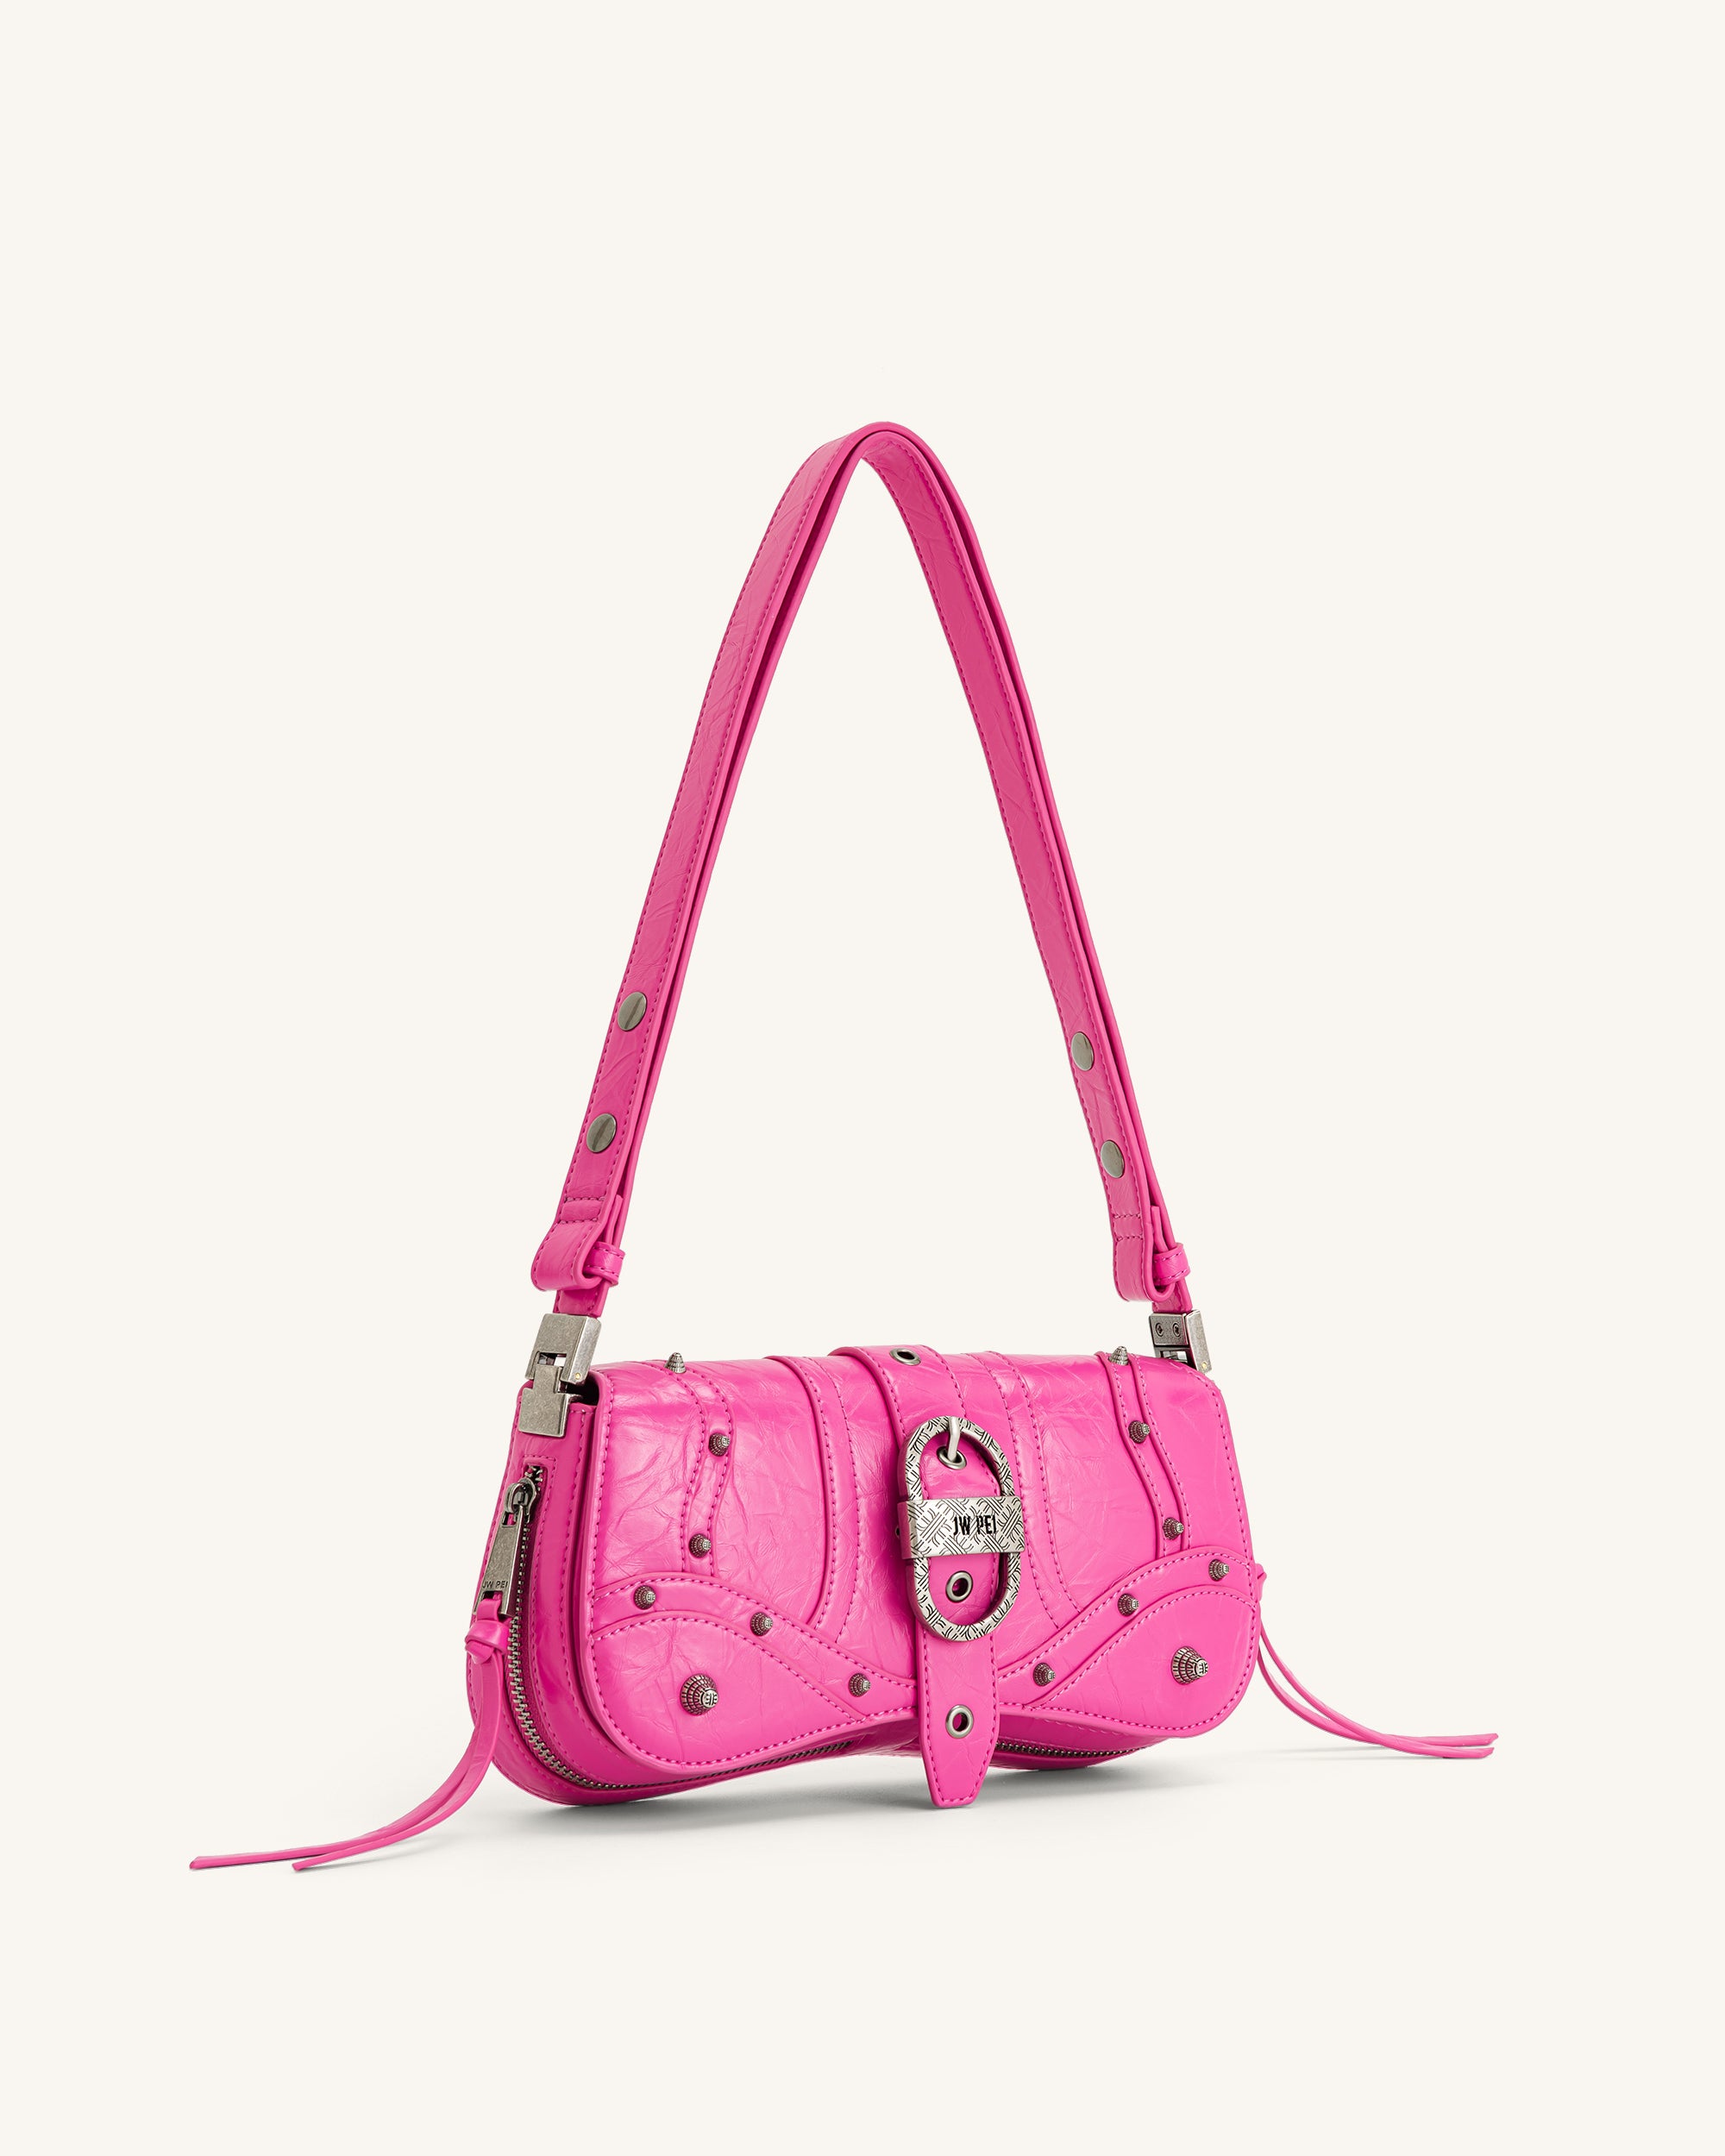 JW PEI Joy Faux Leather Shoulder Bag in Pink